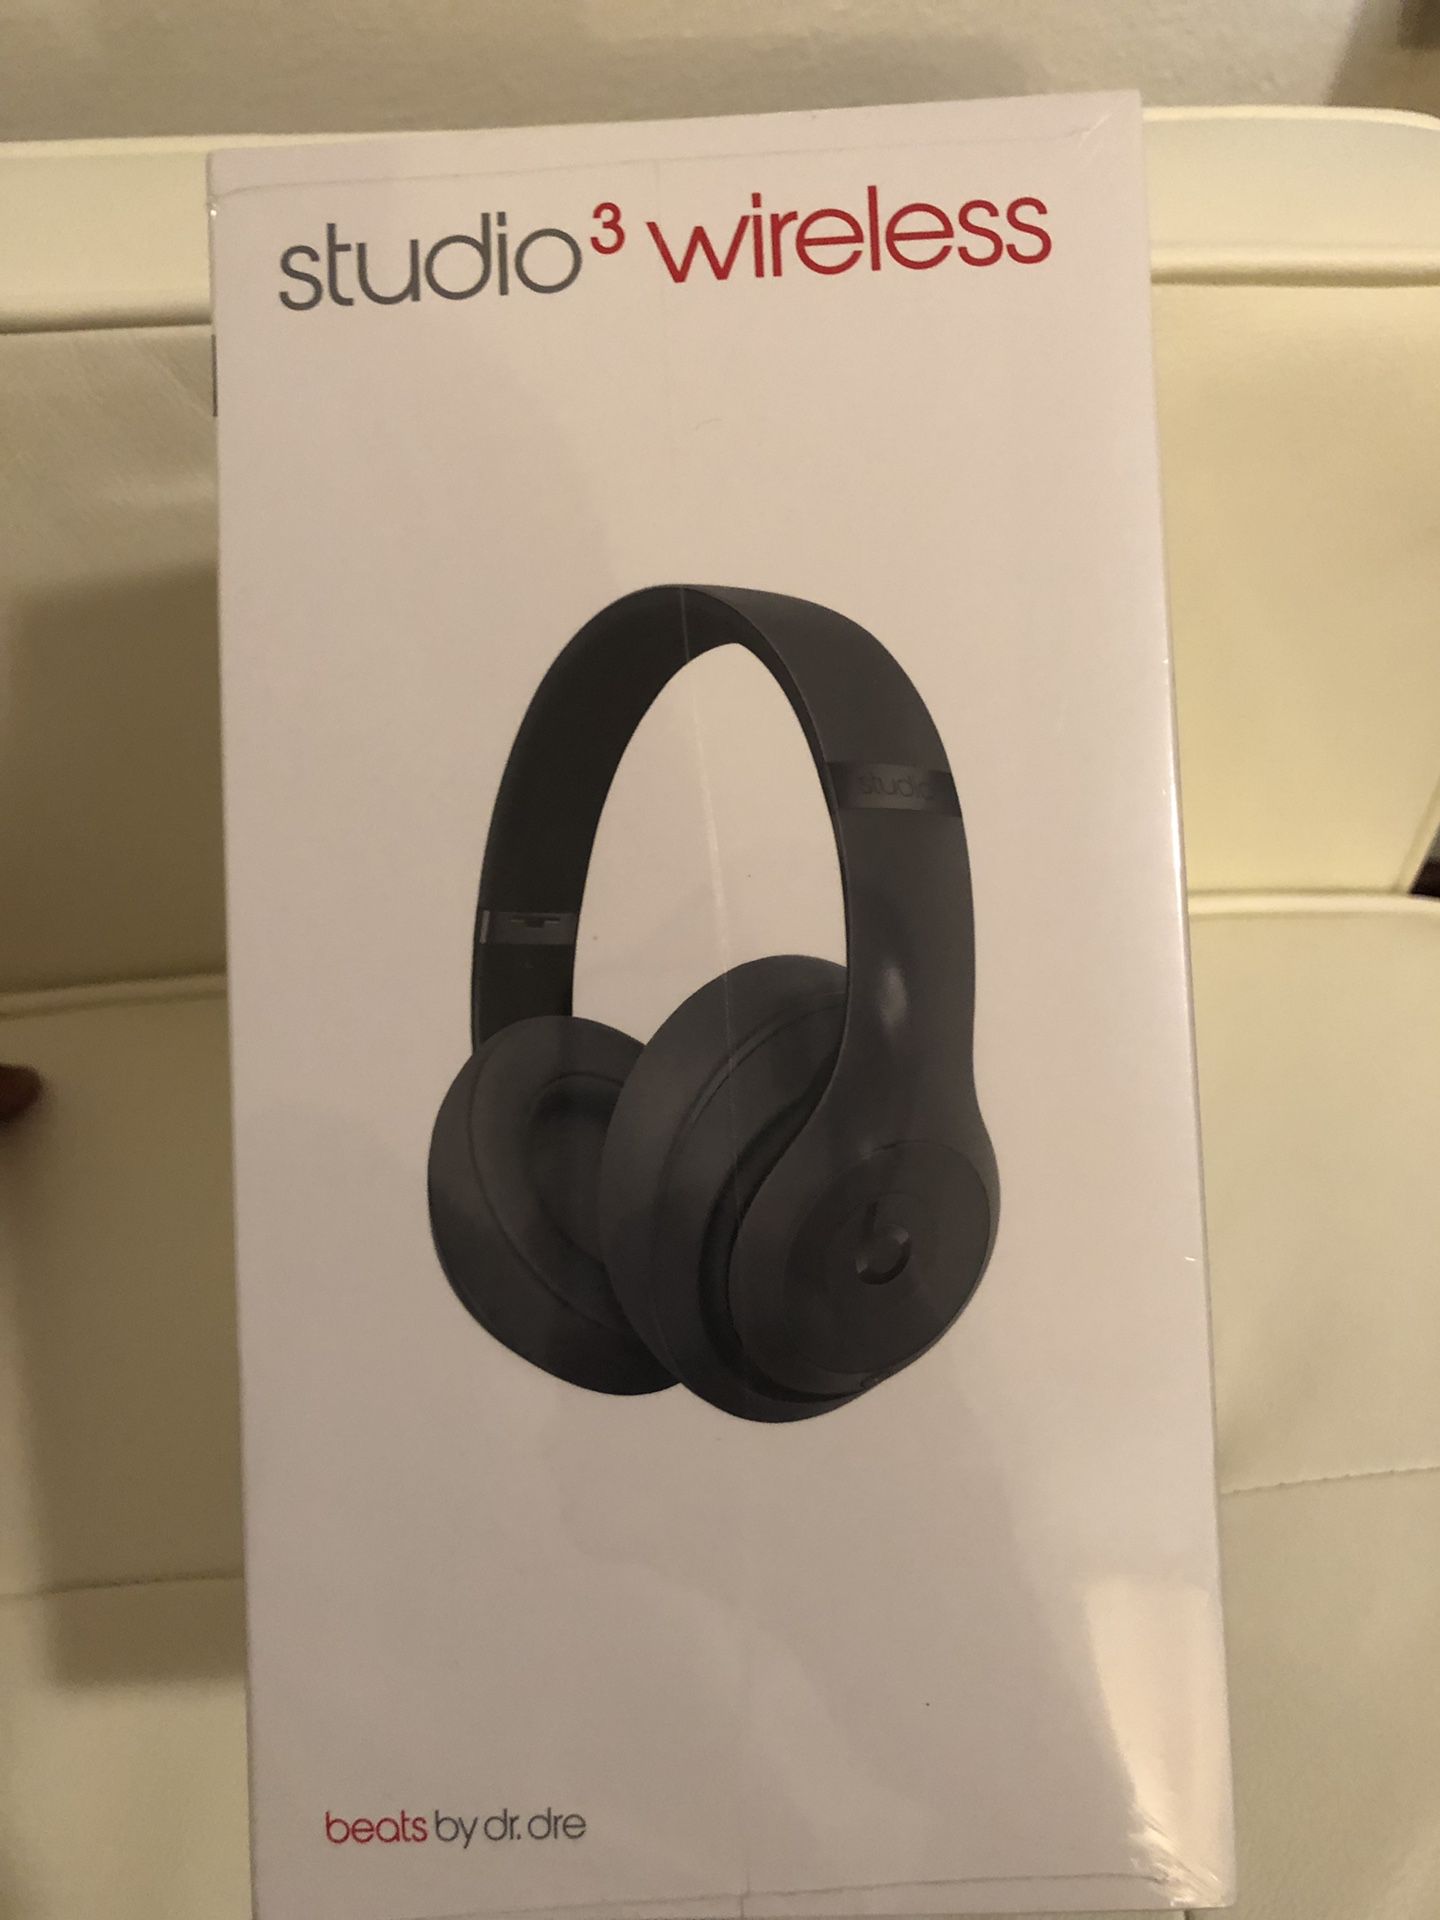 NEW -Studio 3 wireless beats headphones